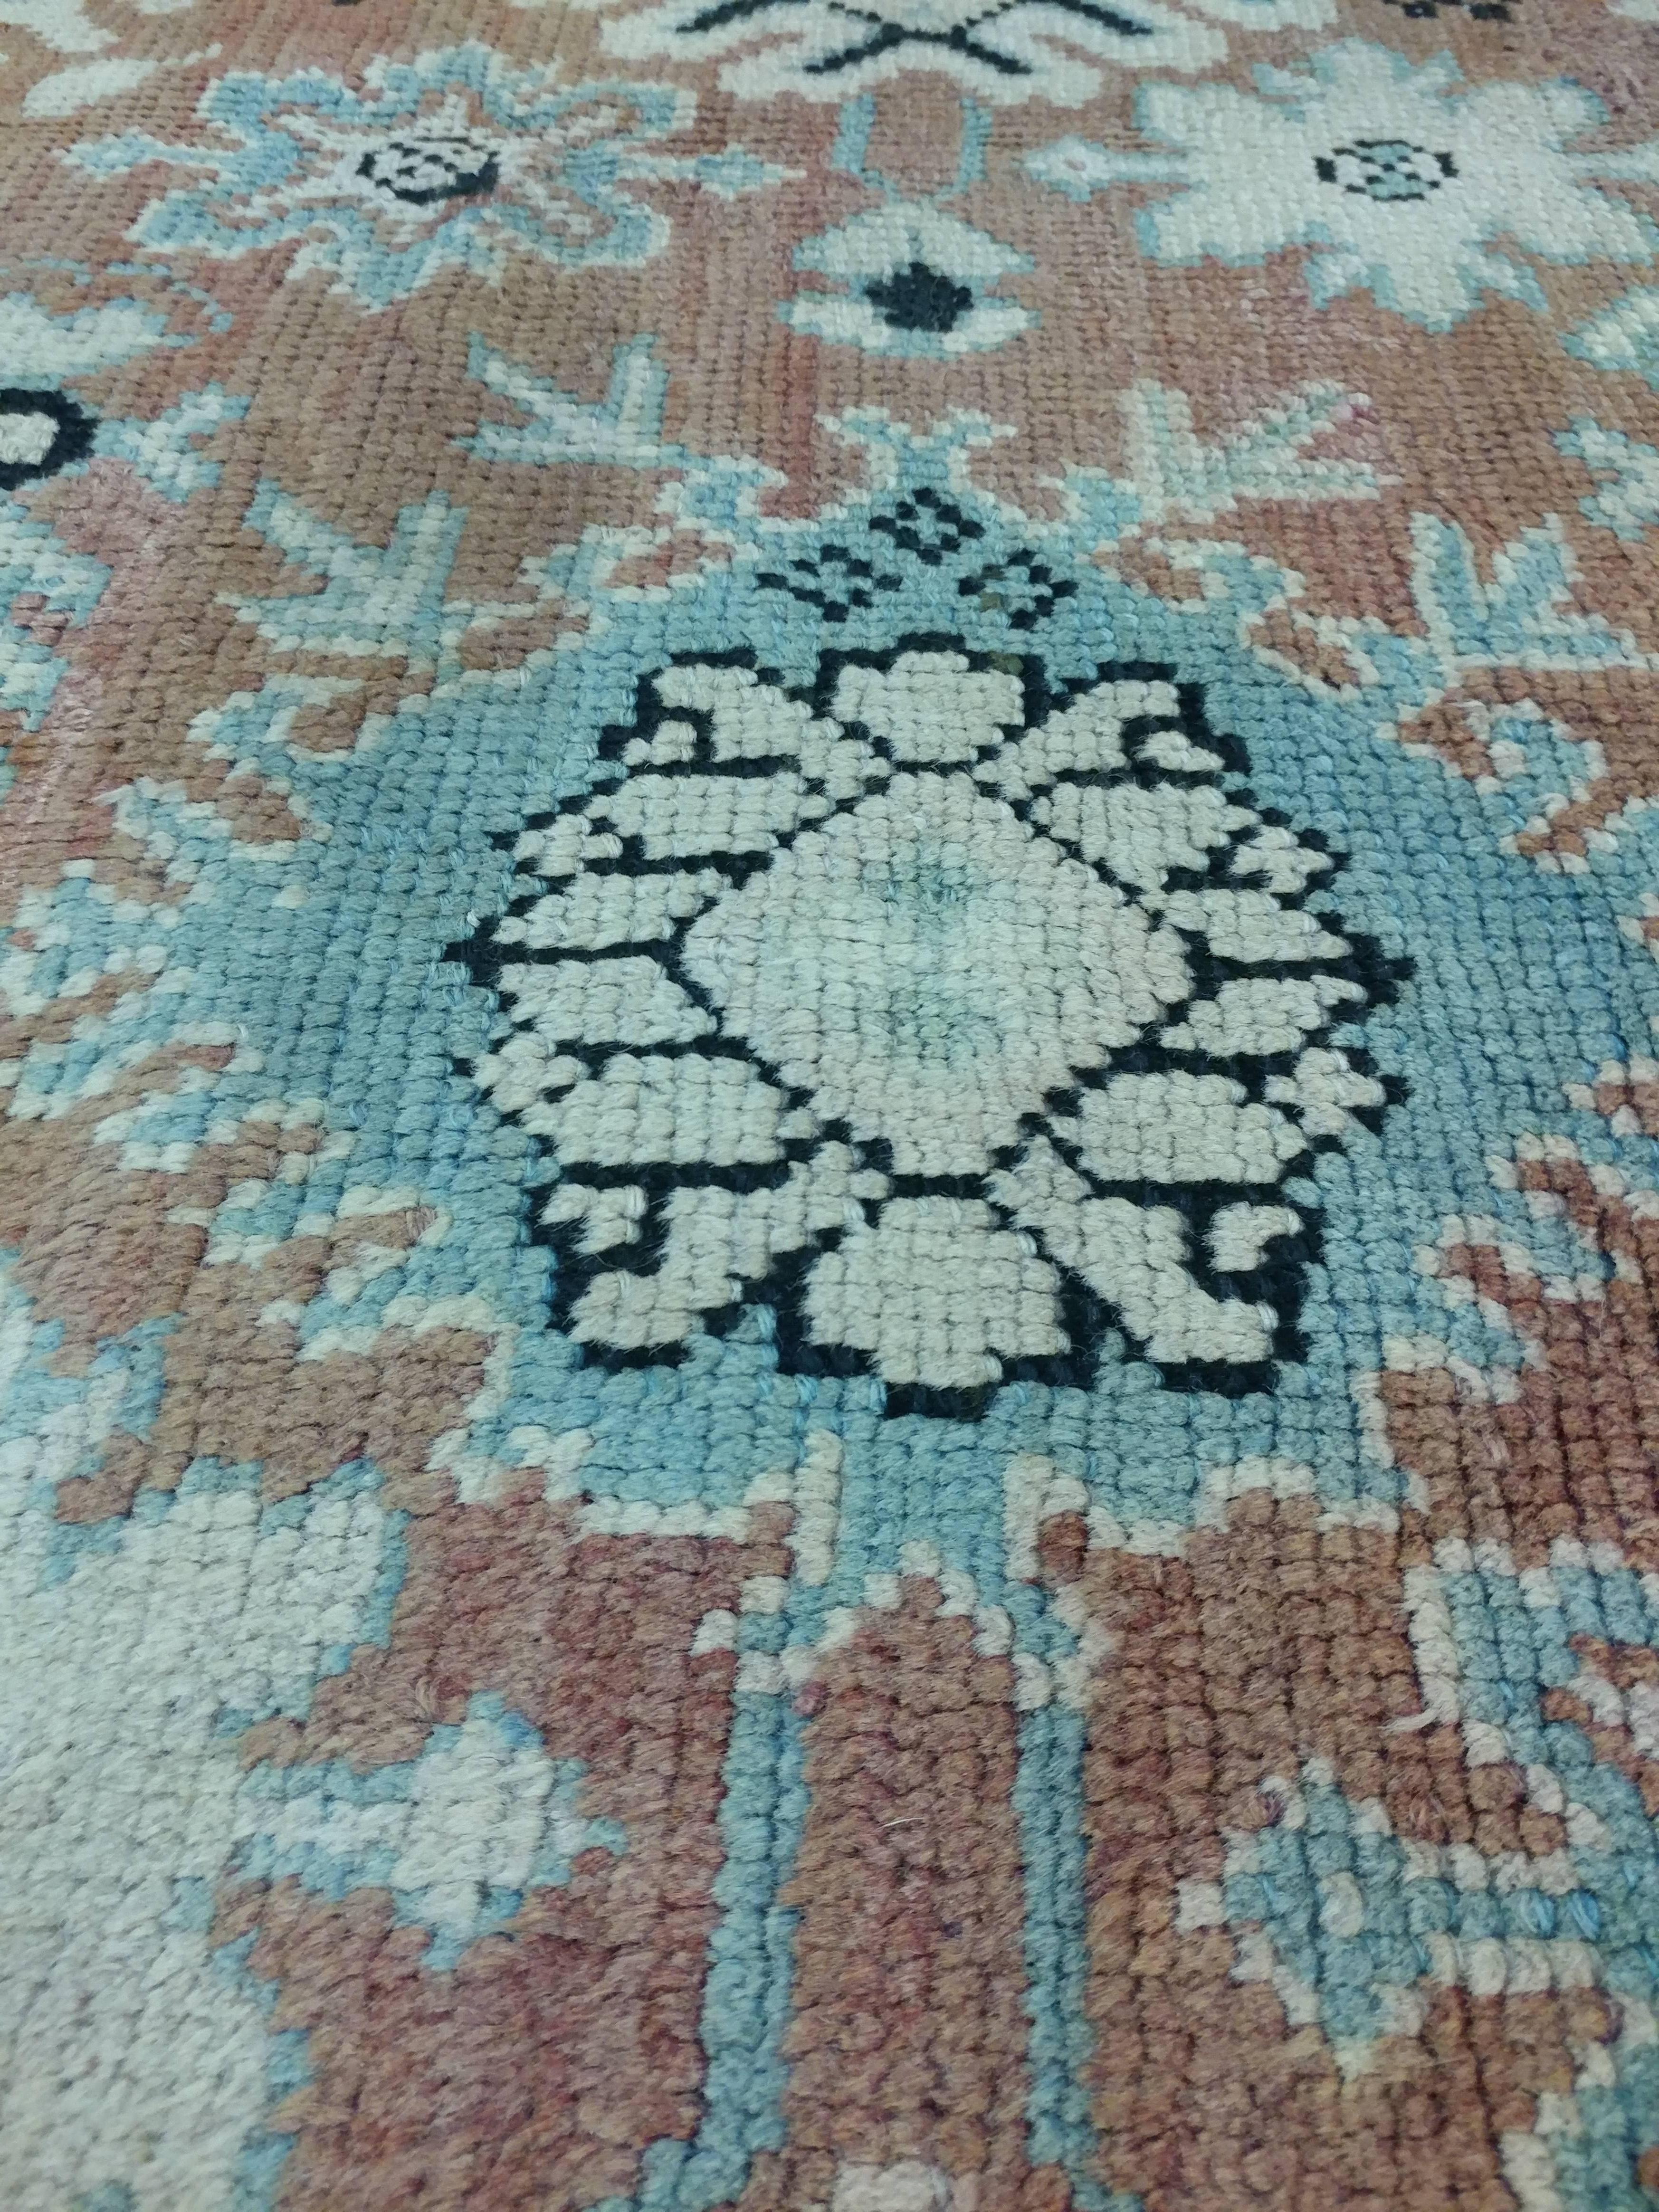 19th Century Antique Oushak Carpet, Red Carpet, Handmade Carpet, Turkish Carpet, Brown, Green For Sale